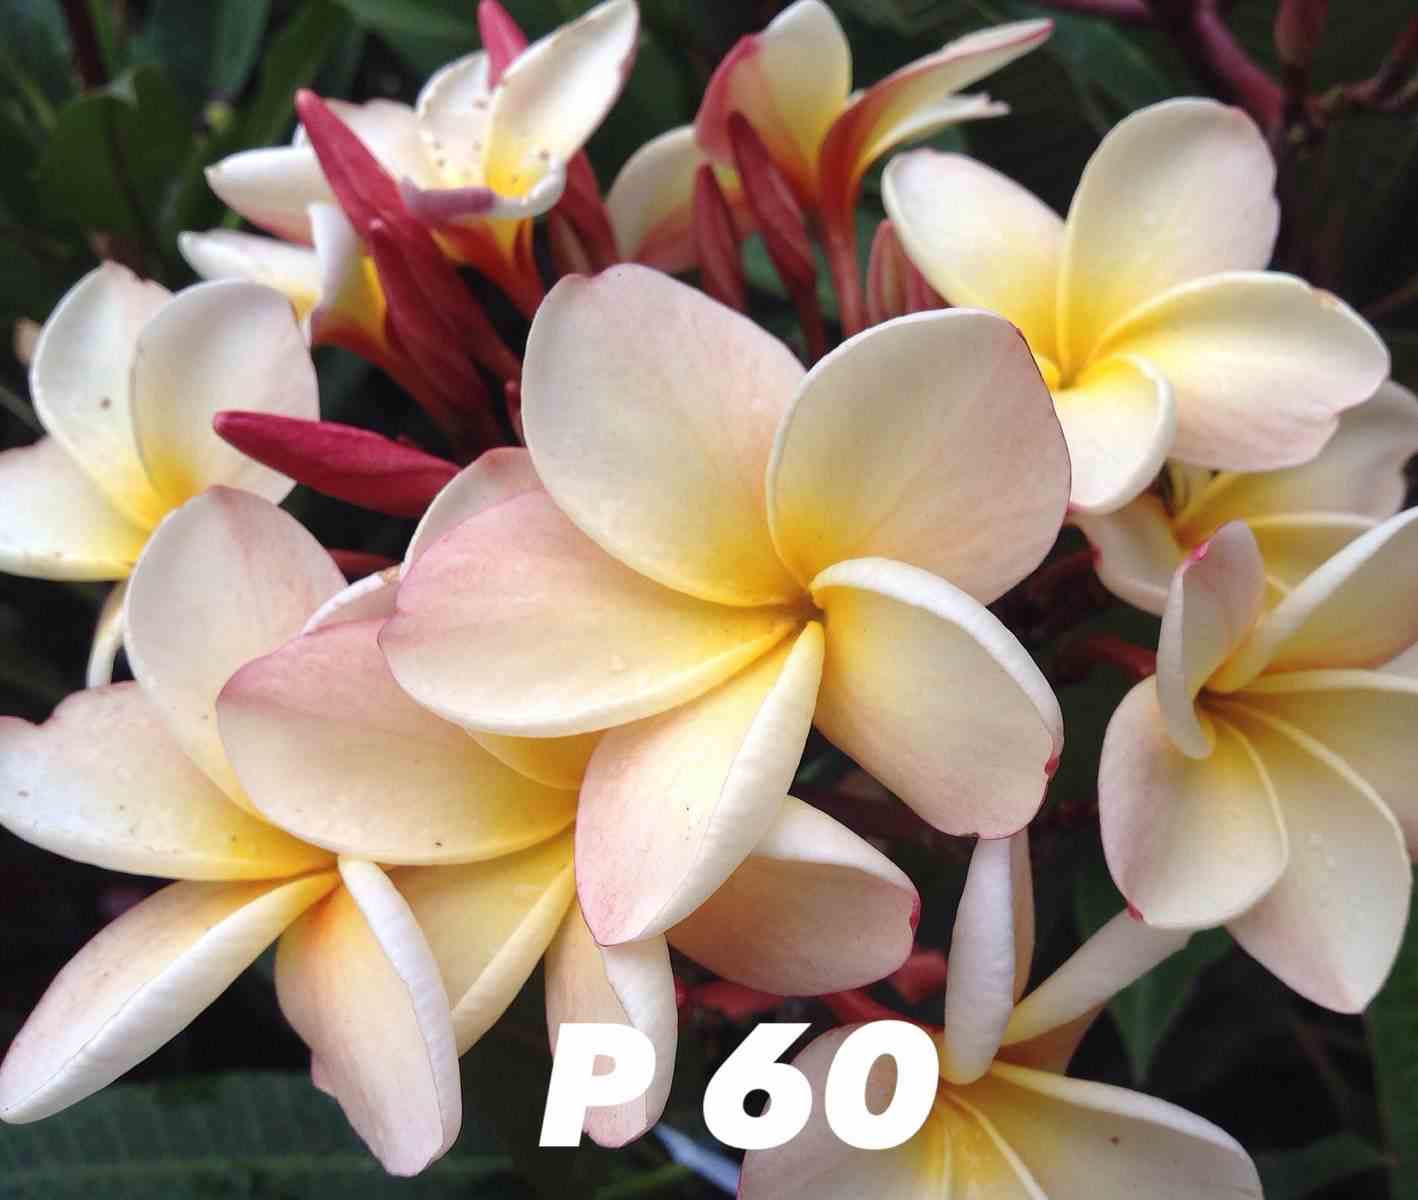 Plumeria rubra "p60" (frangipanier) taille pot de 2 litres ? 20/30 cm -   blanc/jaune/rose